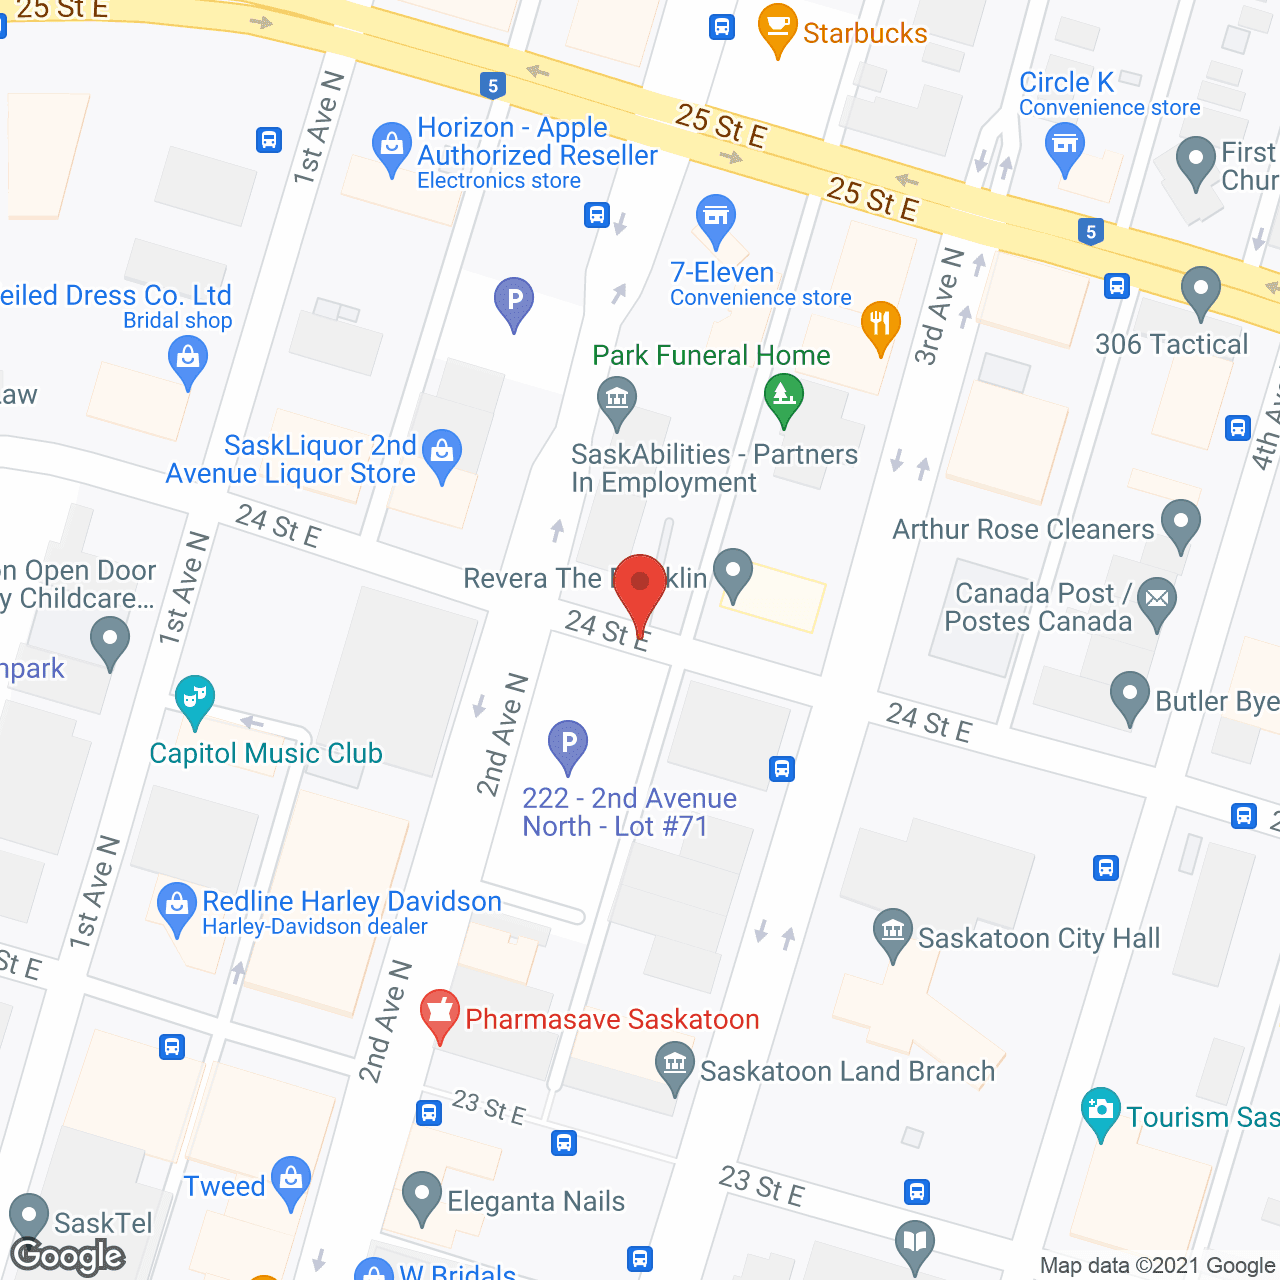 Franklin in google map